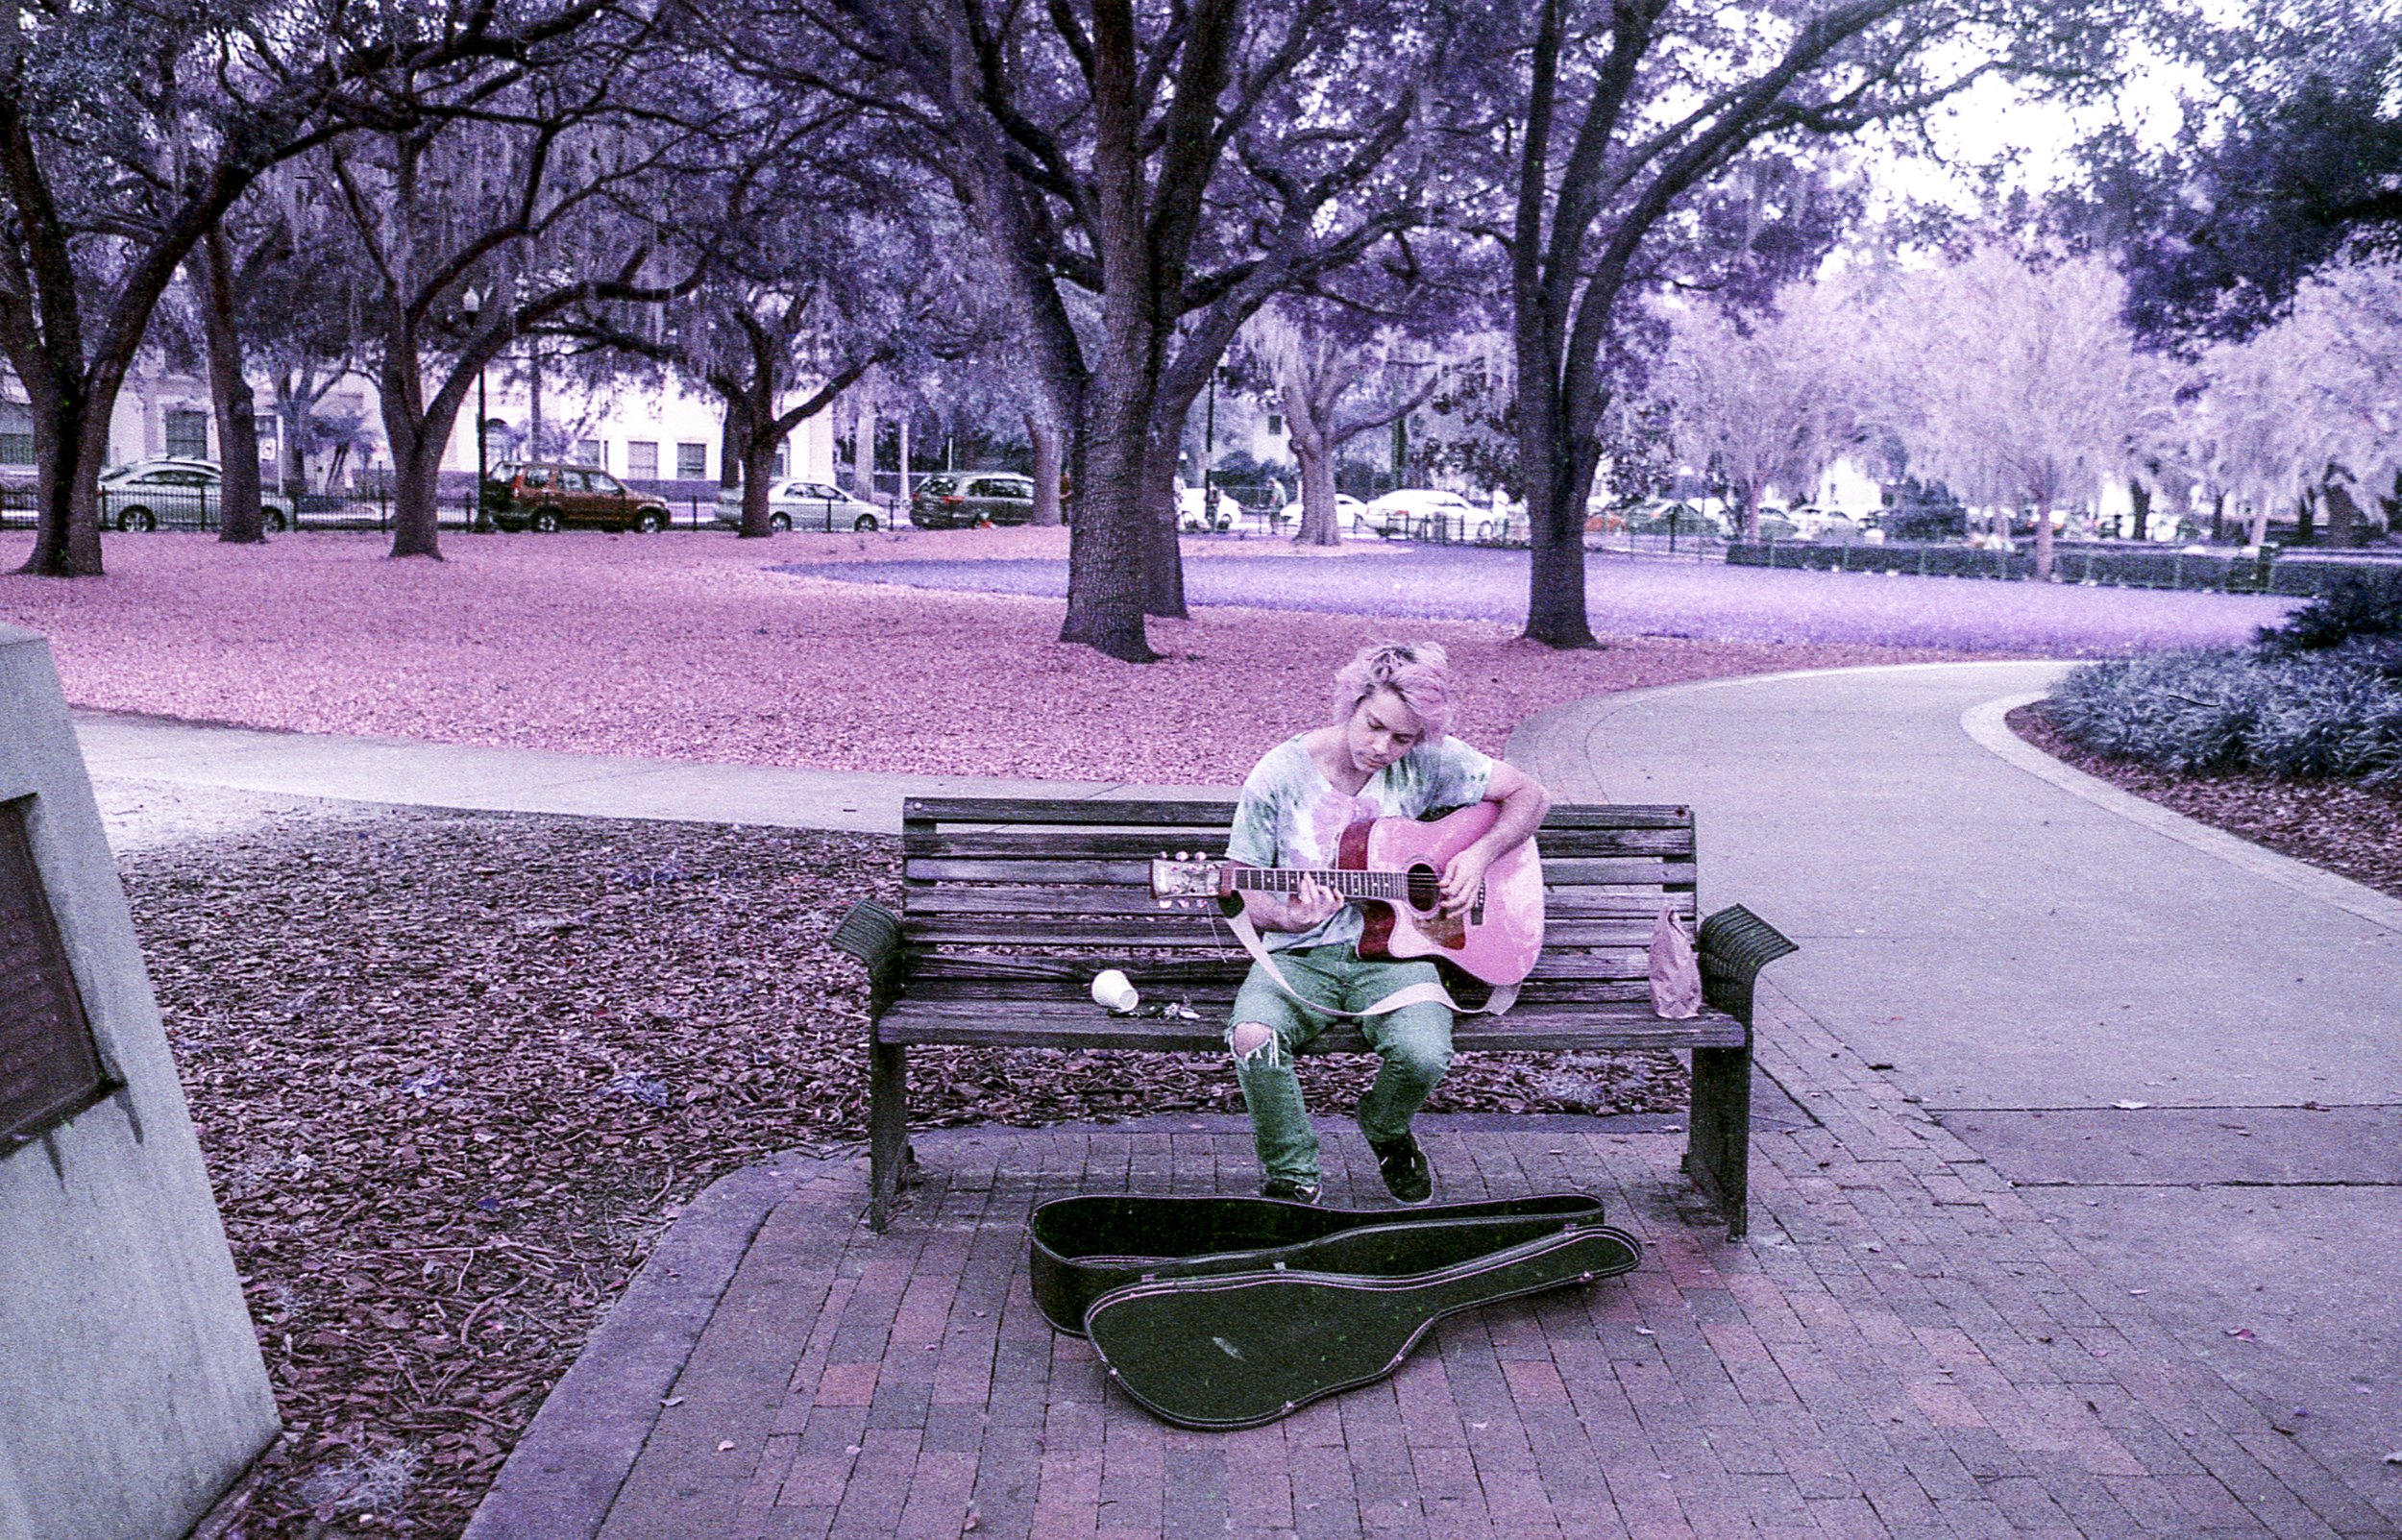  A busker plays guitar at Lake Eola Park in Orlando, shot on Lomography Purple film. 